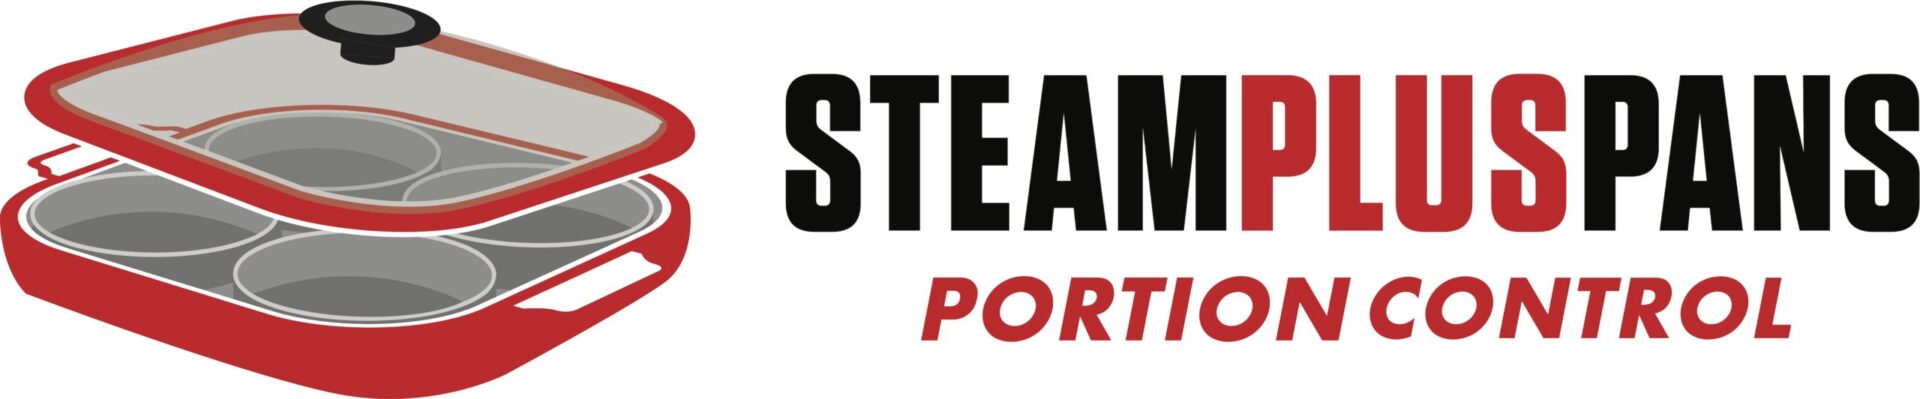 Steam Plus Pans